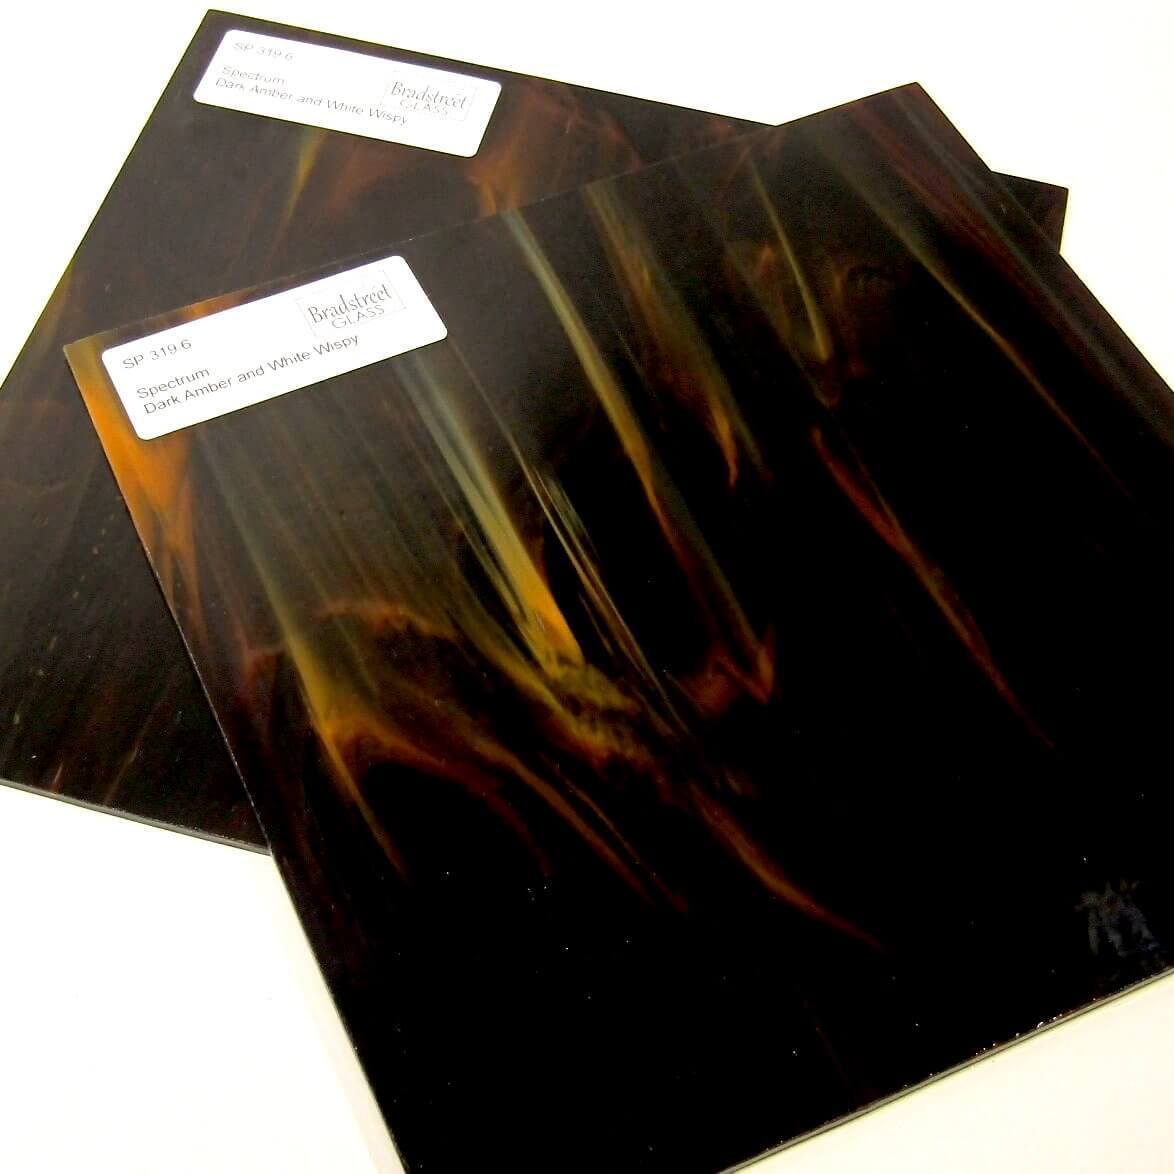 Spectrum SP 319.6 Stained Glass Sheet Opaque Streaky Swirled Dark Amber and White Wispy